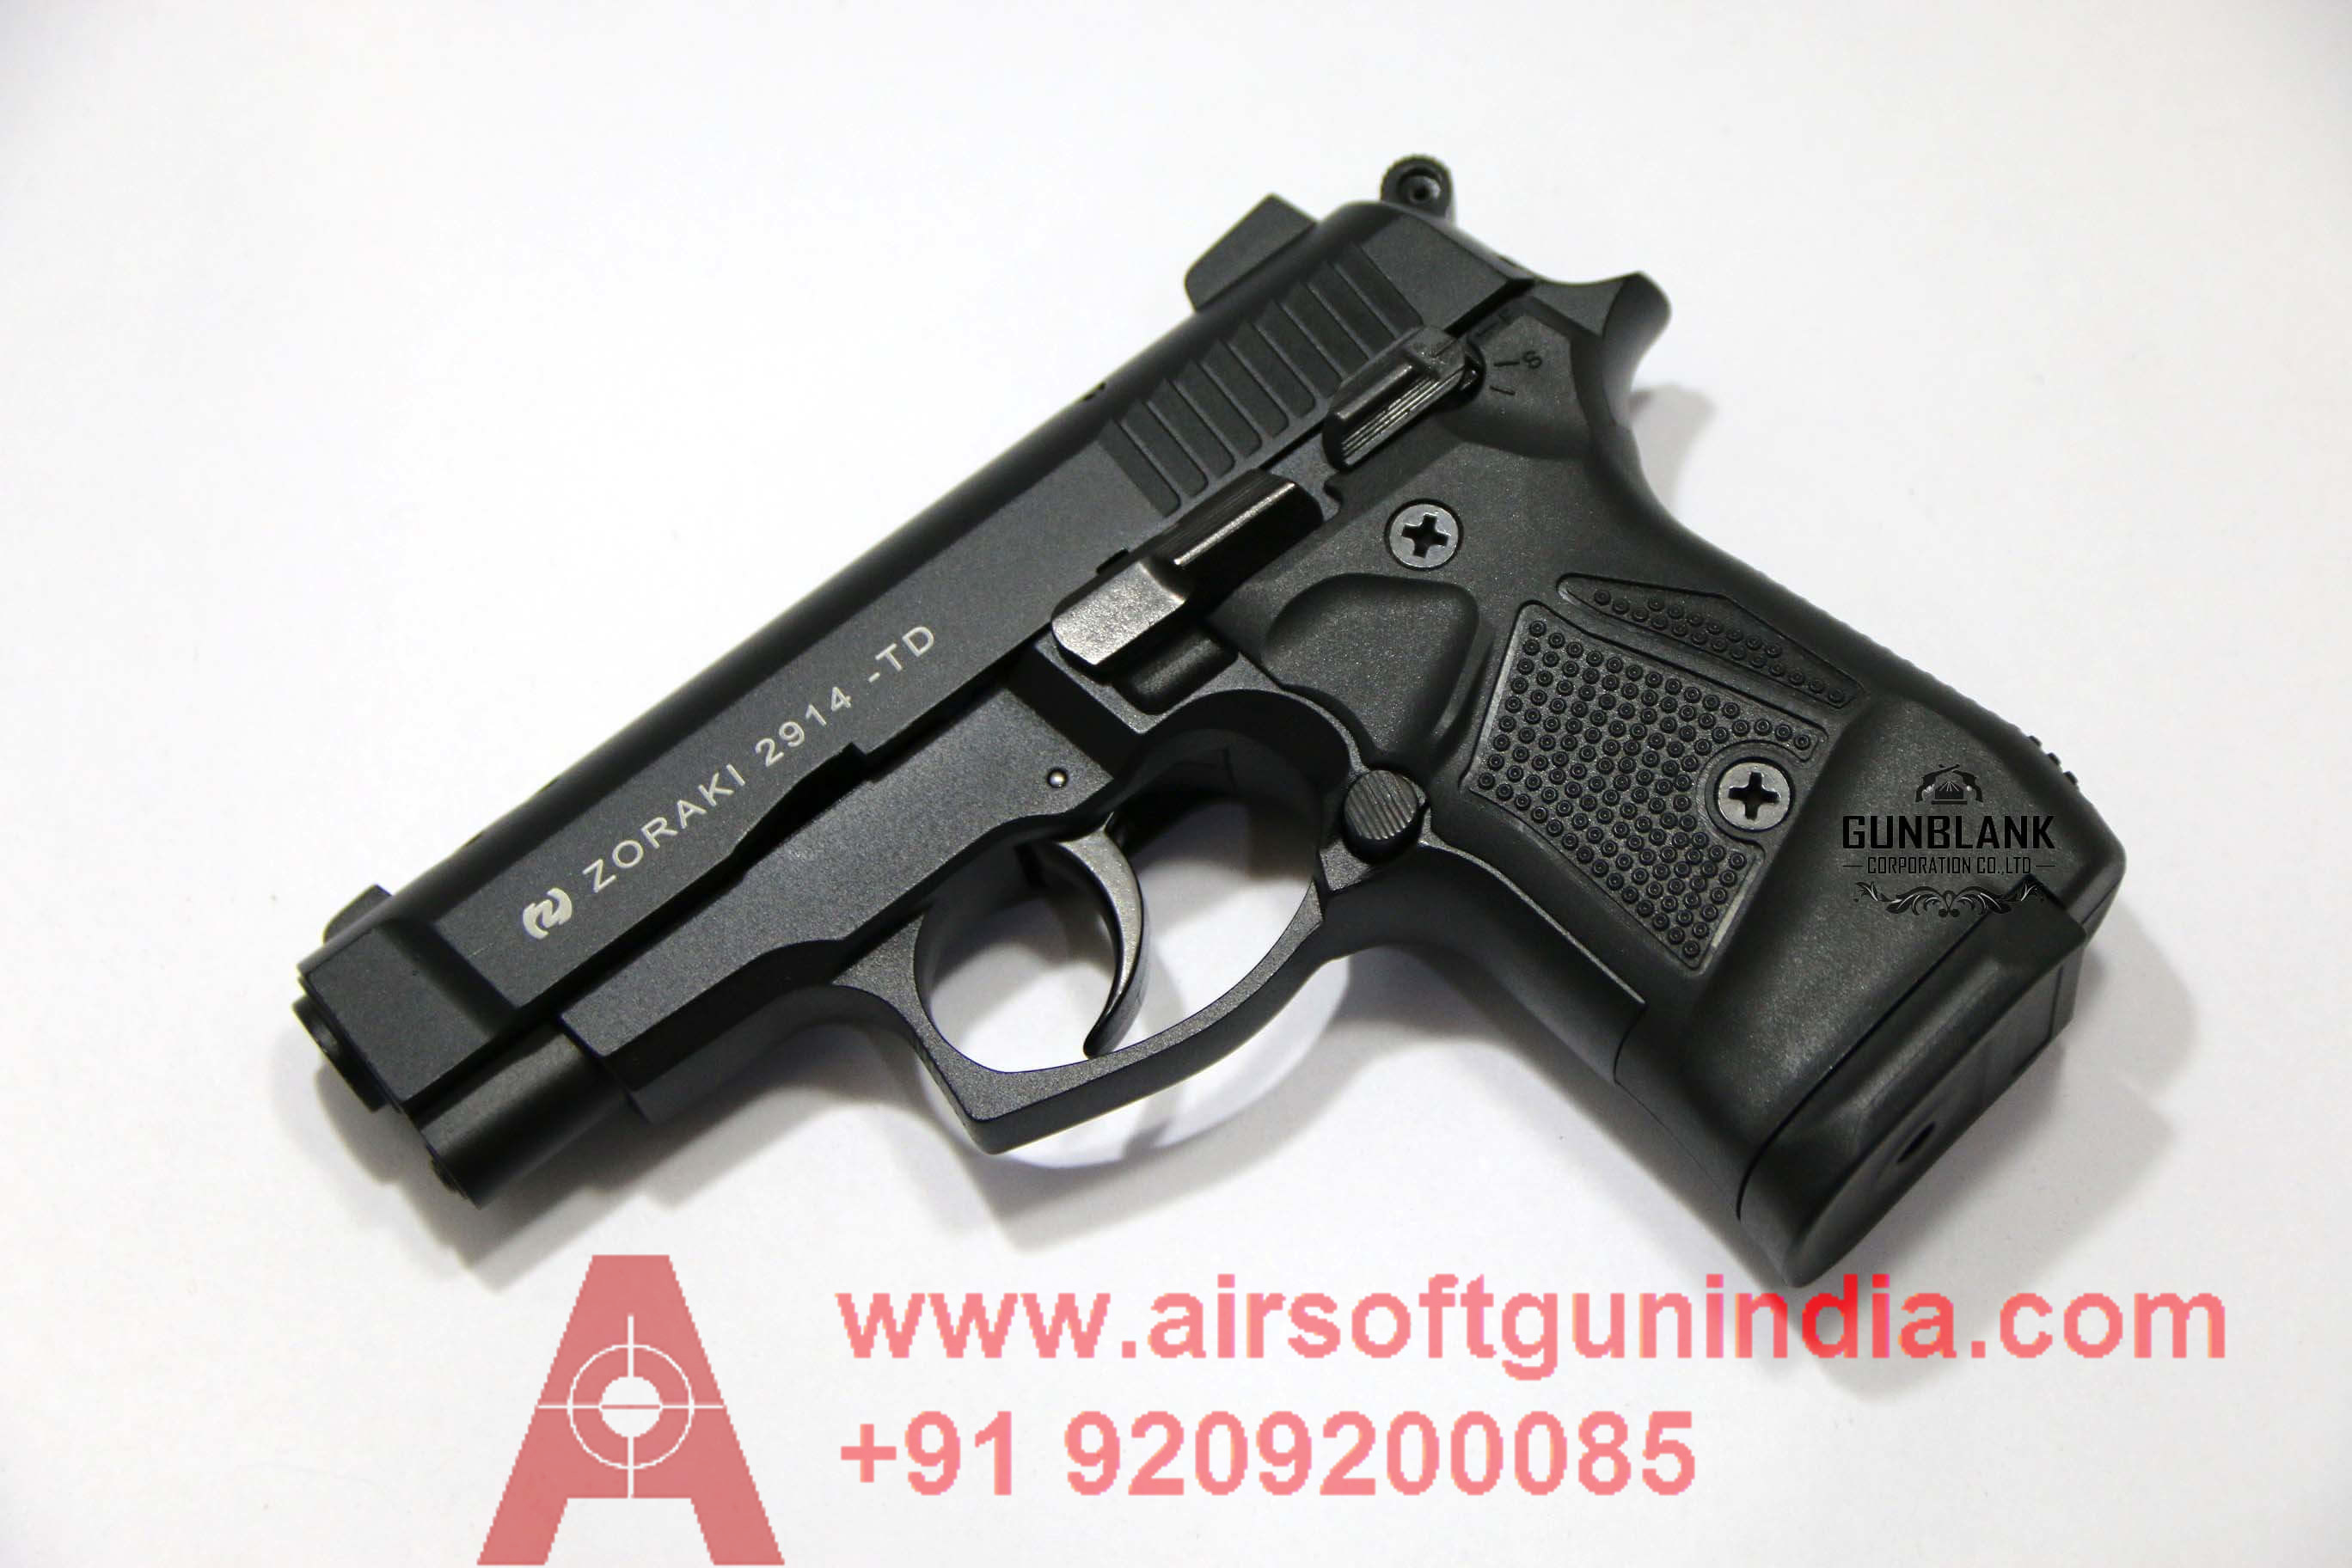 Zoraki M2914 Black Finish 9mm Front Firing Blank Gun By Airsoft Gun India